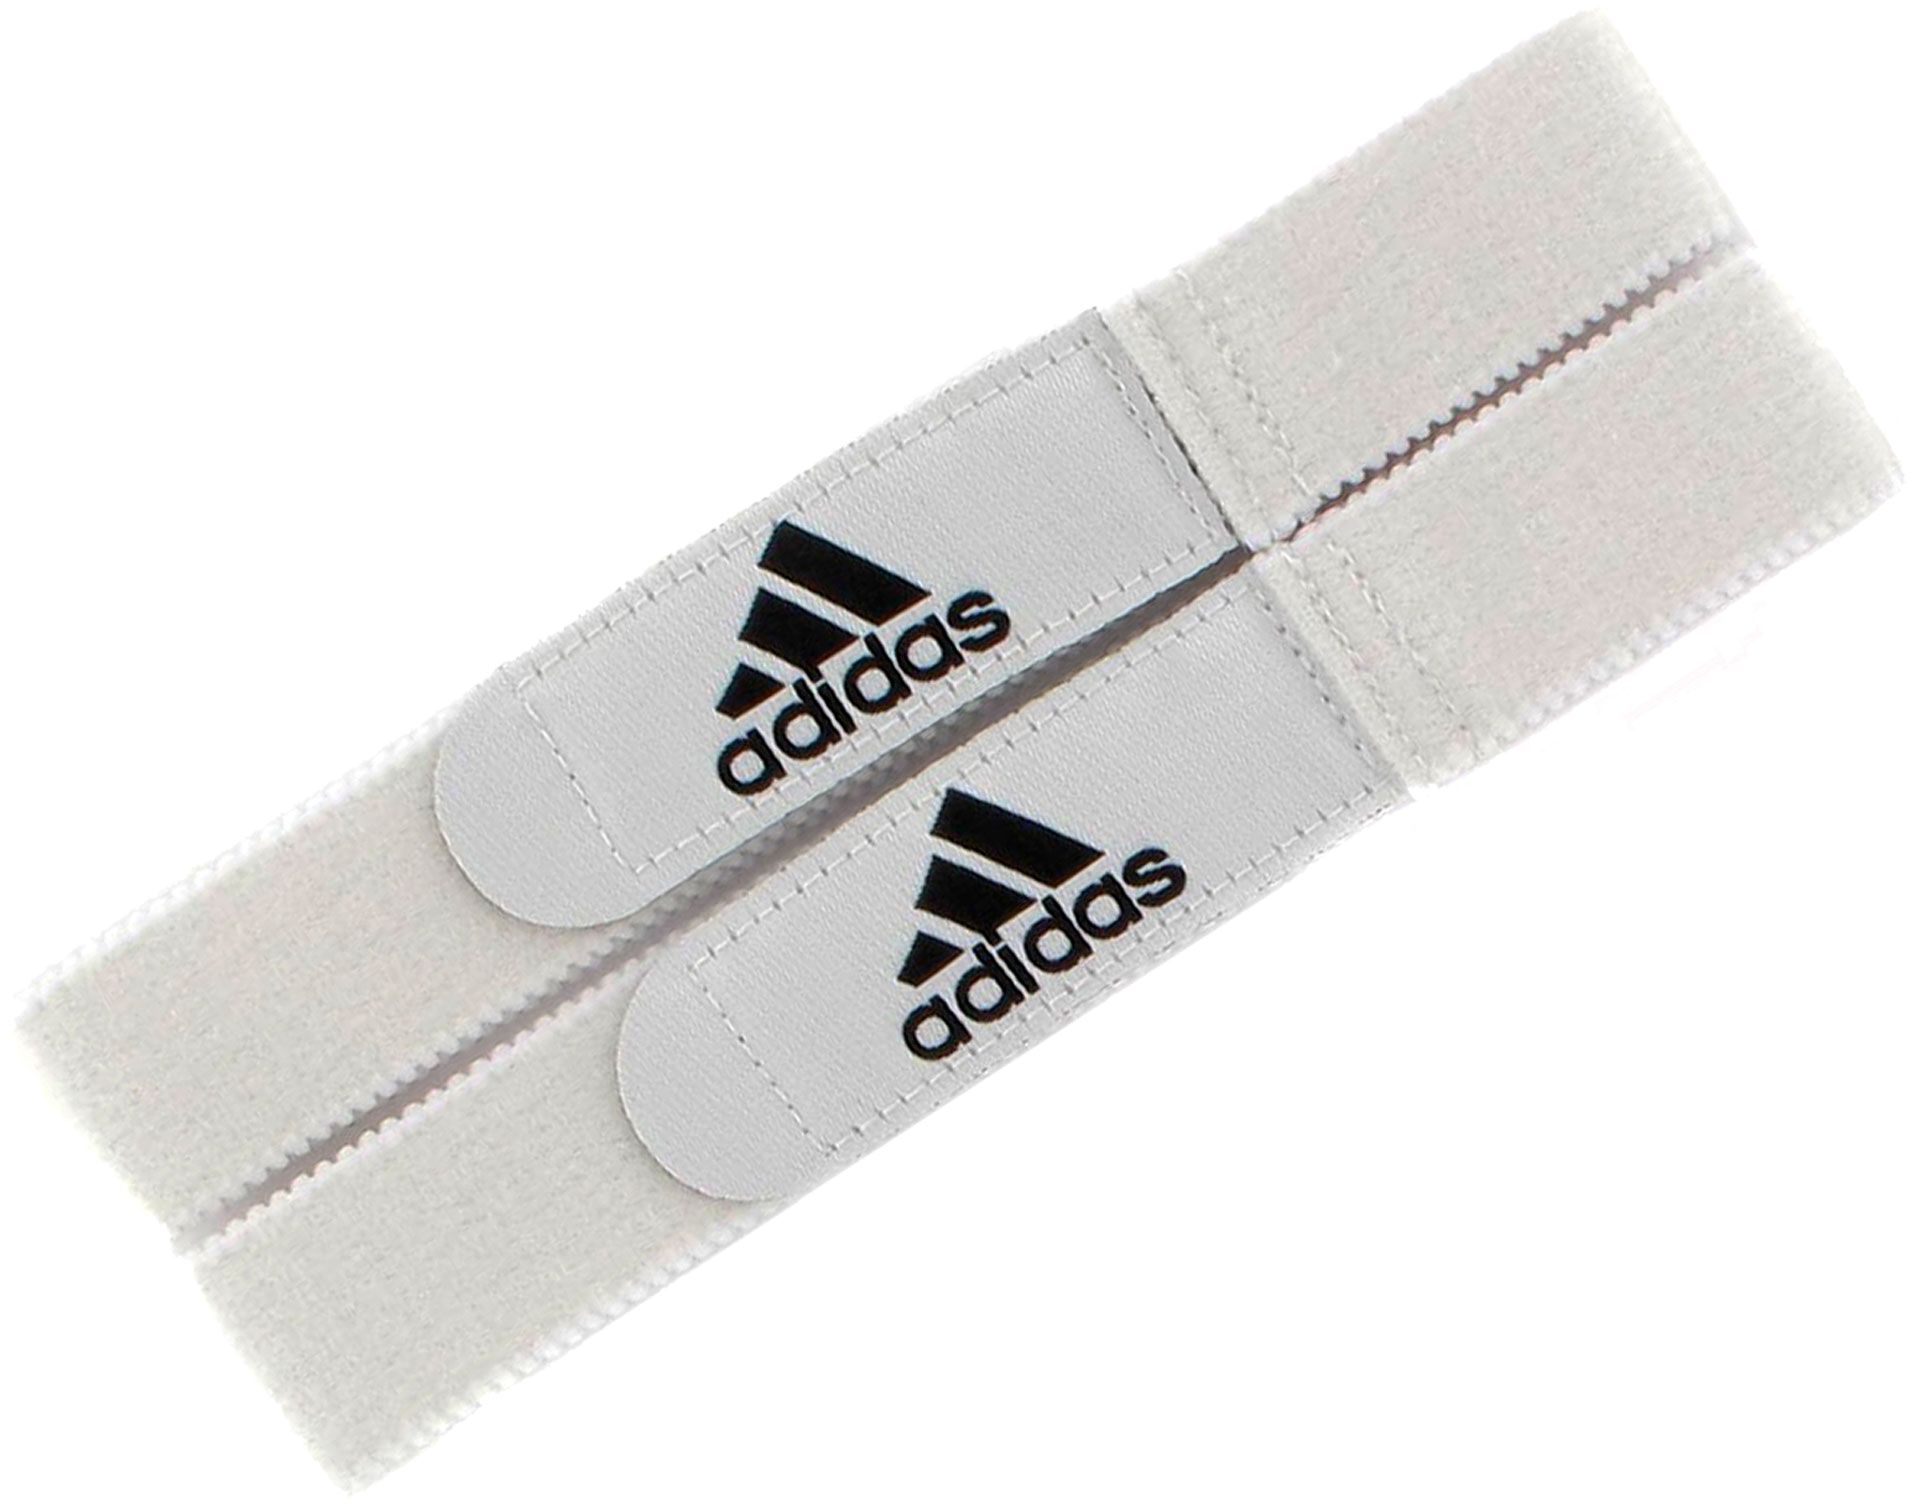 adidas shin guard straps